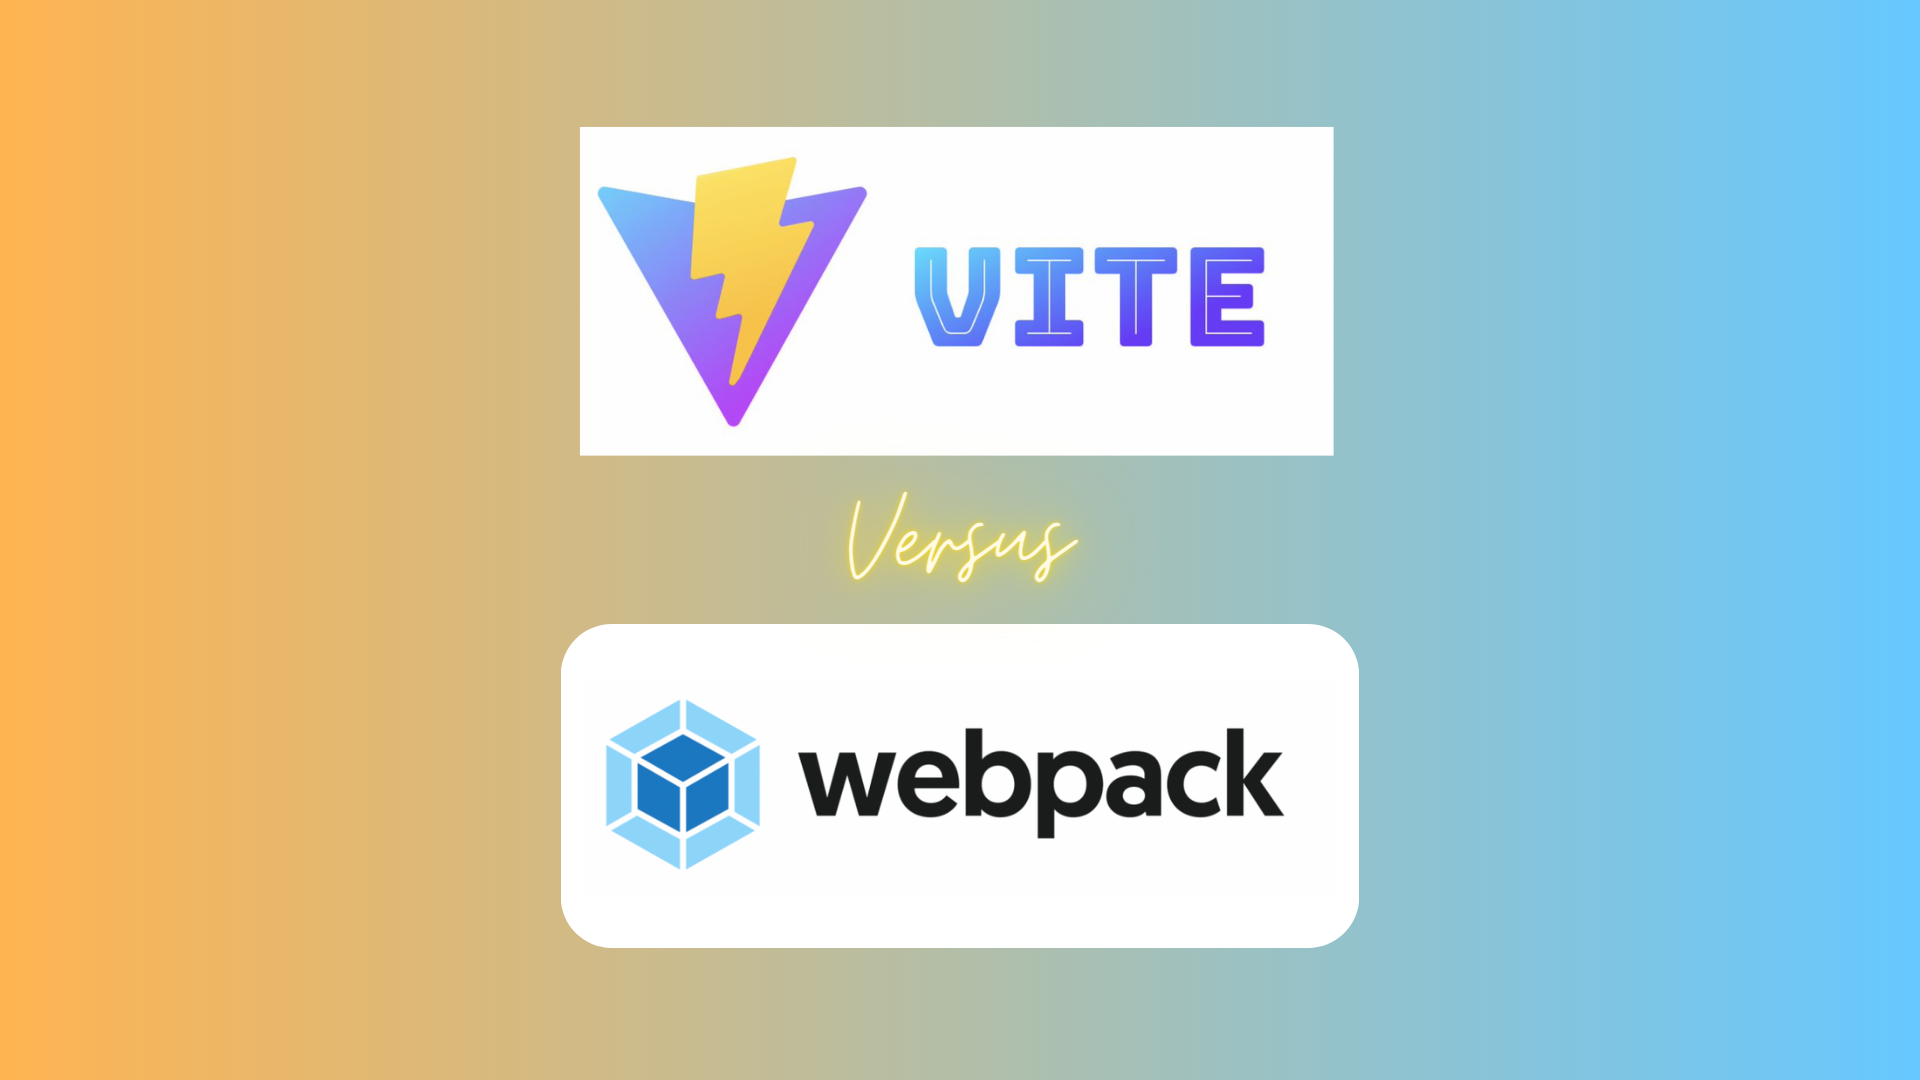 Vite versus Webpack with logos on a blended orange and blue background.